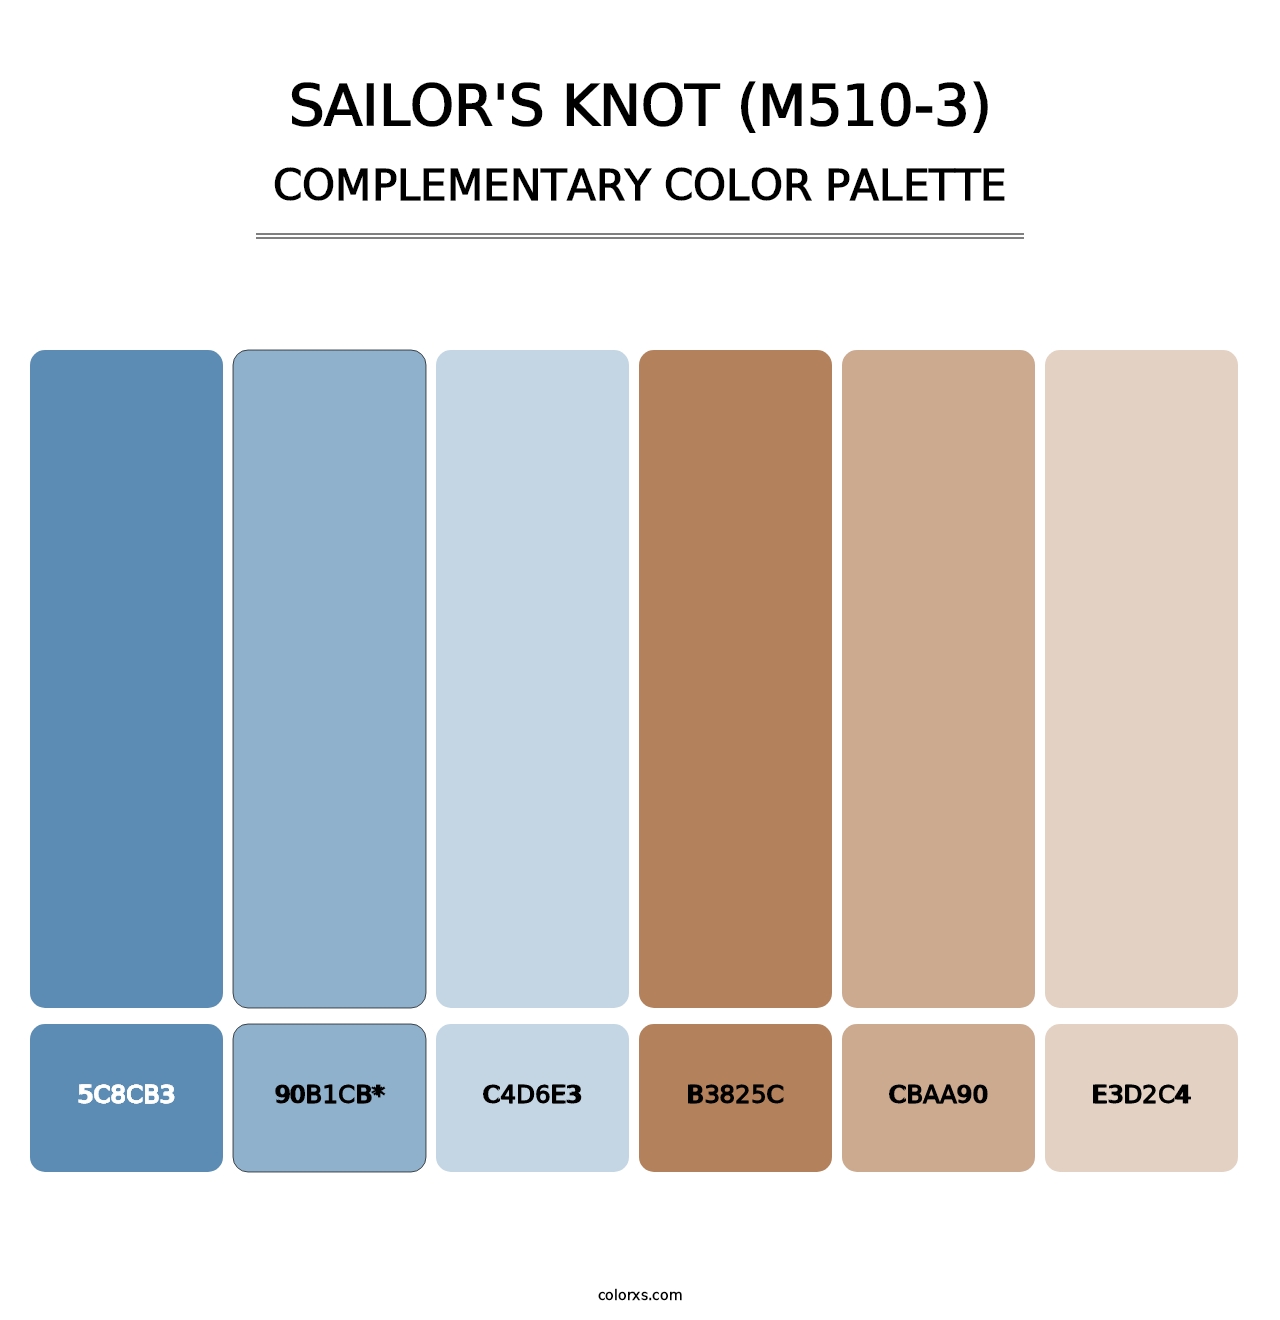 Sailor'S Knot (M510-3) - Complementary Color Palette